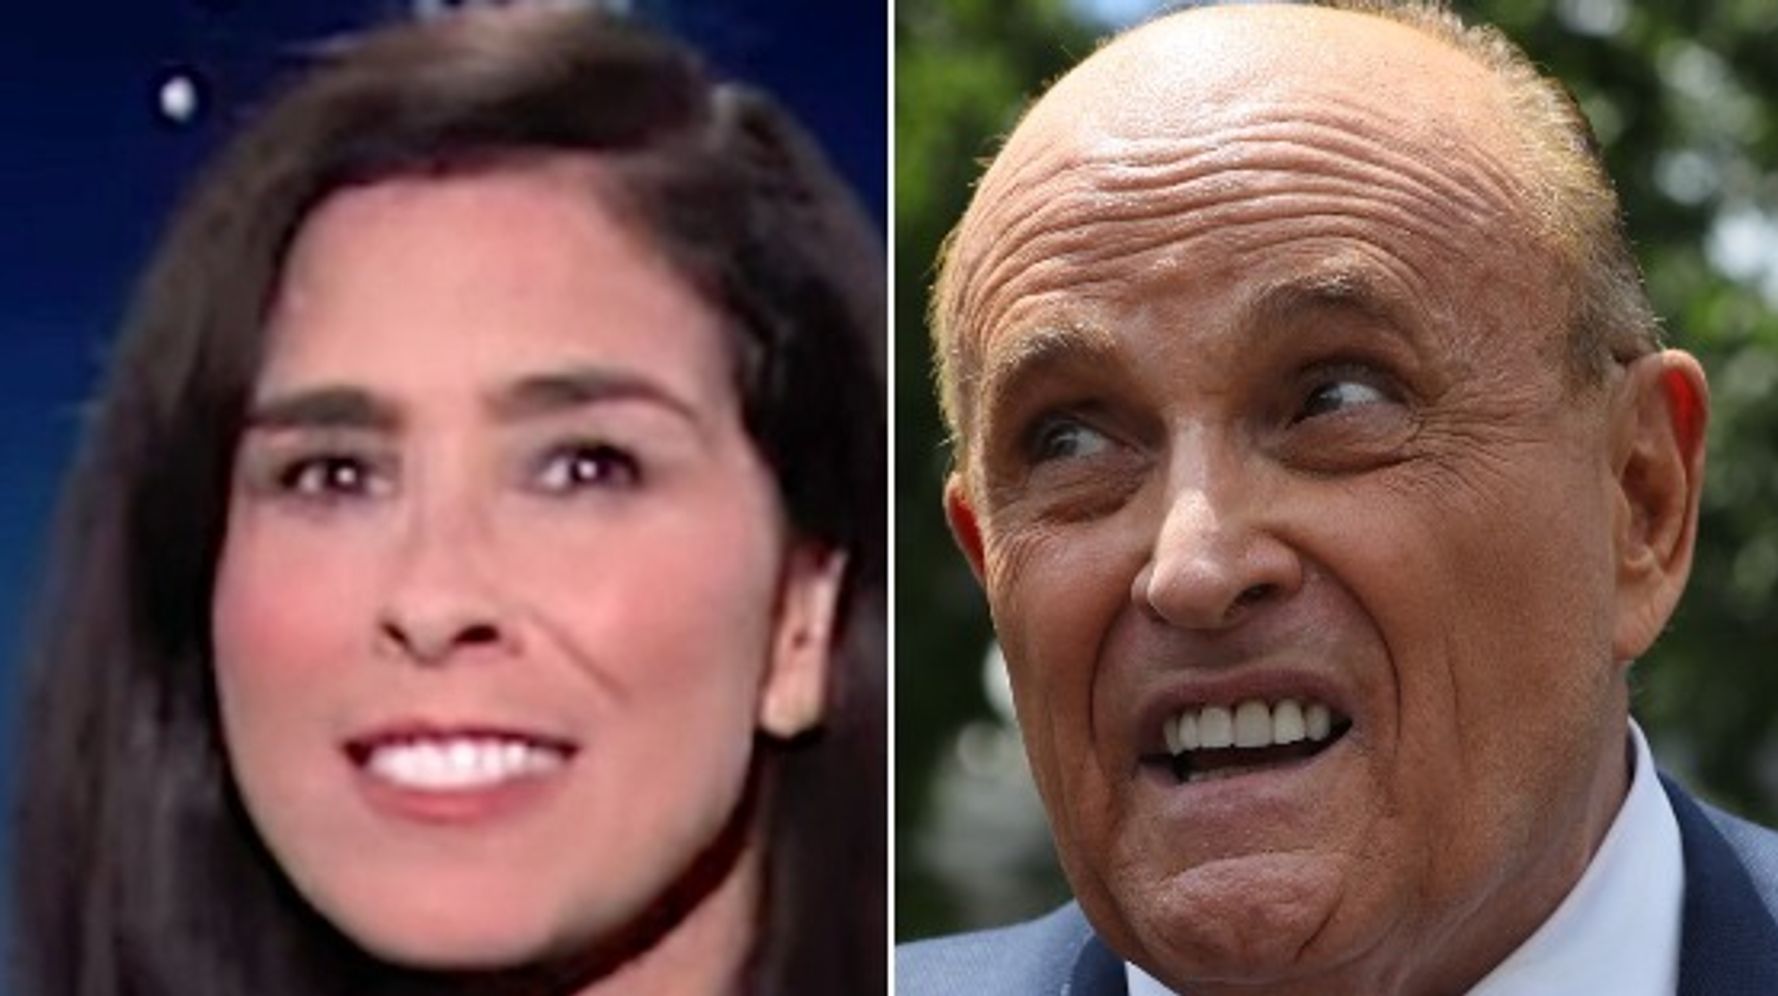 Sarah Silverman Spots The Saddest Part Of Rudy Giuliani's Cameo Money Grab